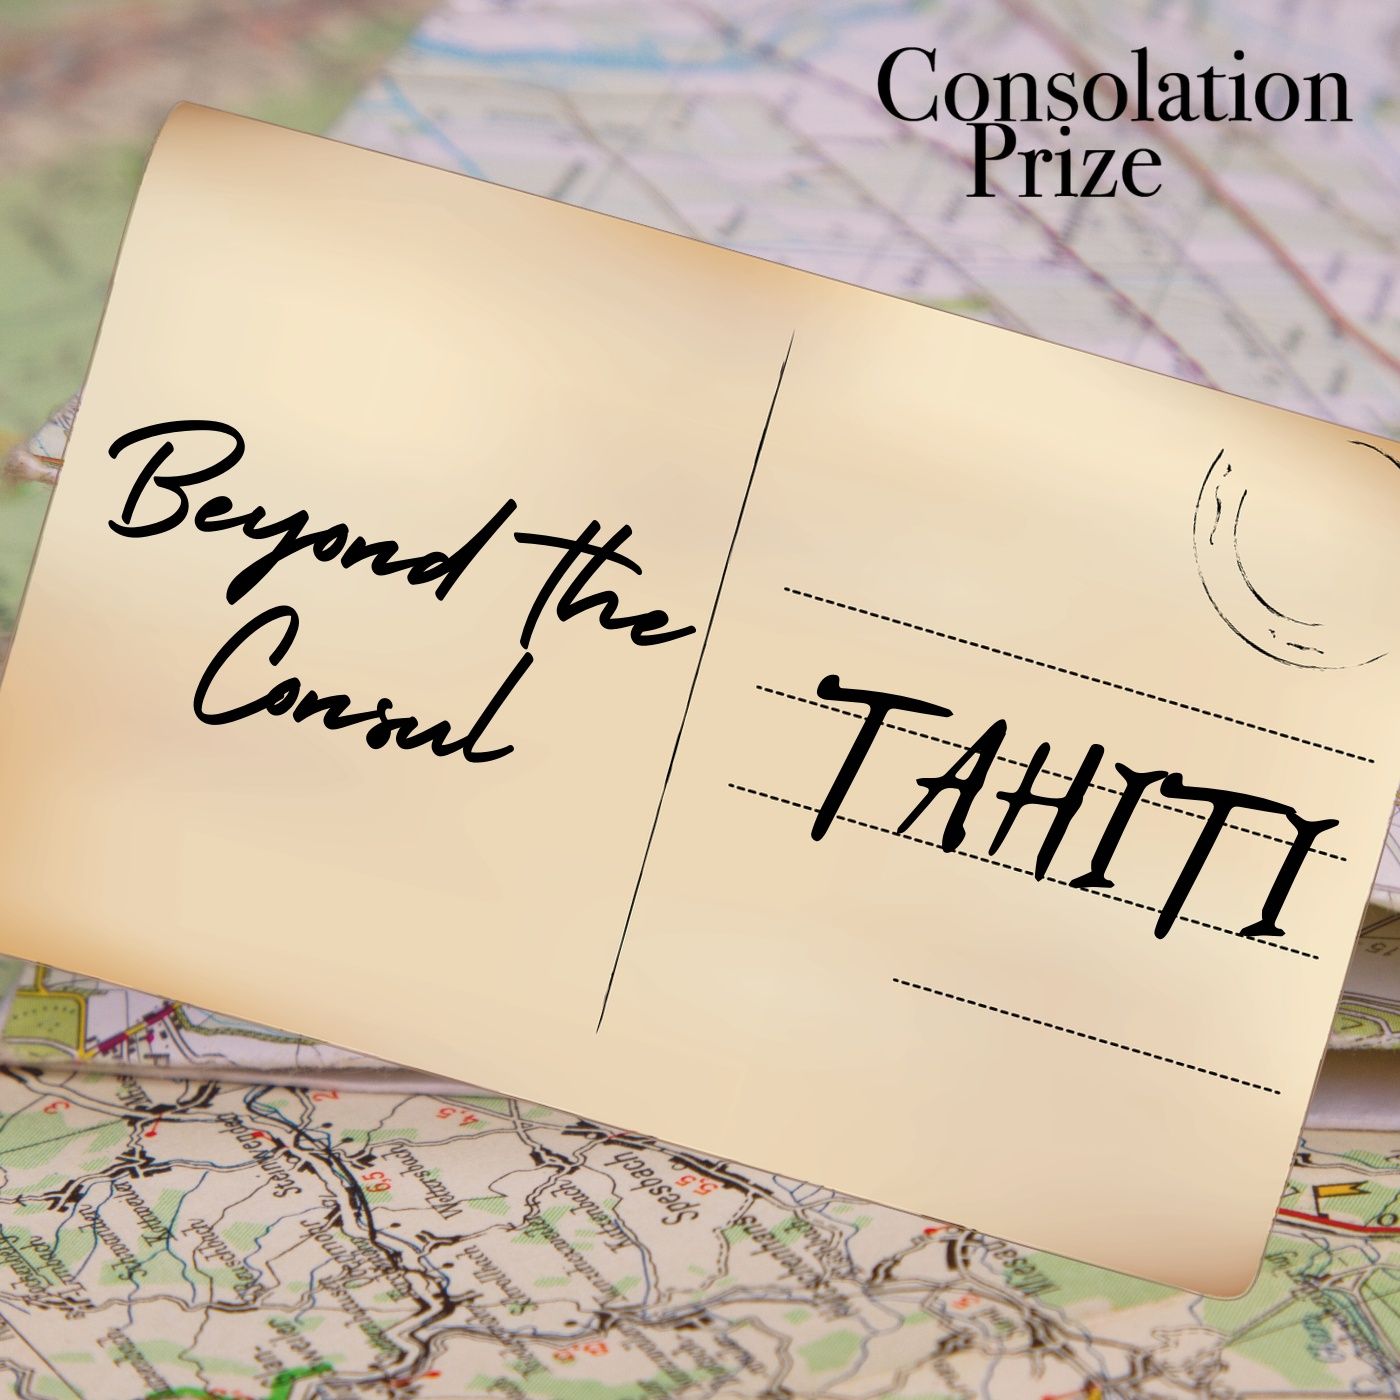 Beyond the Consul: Tahiti